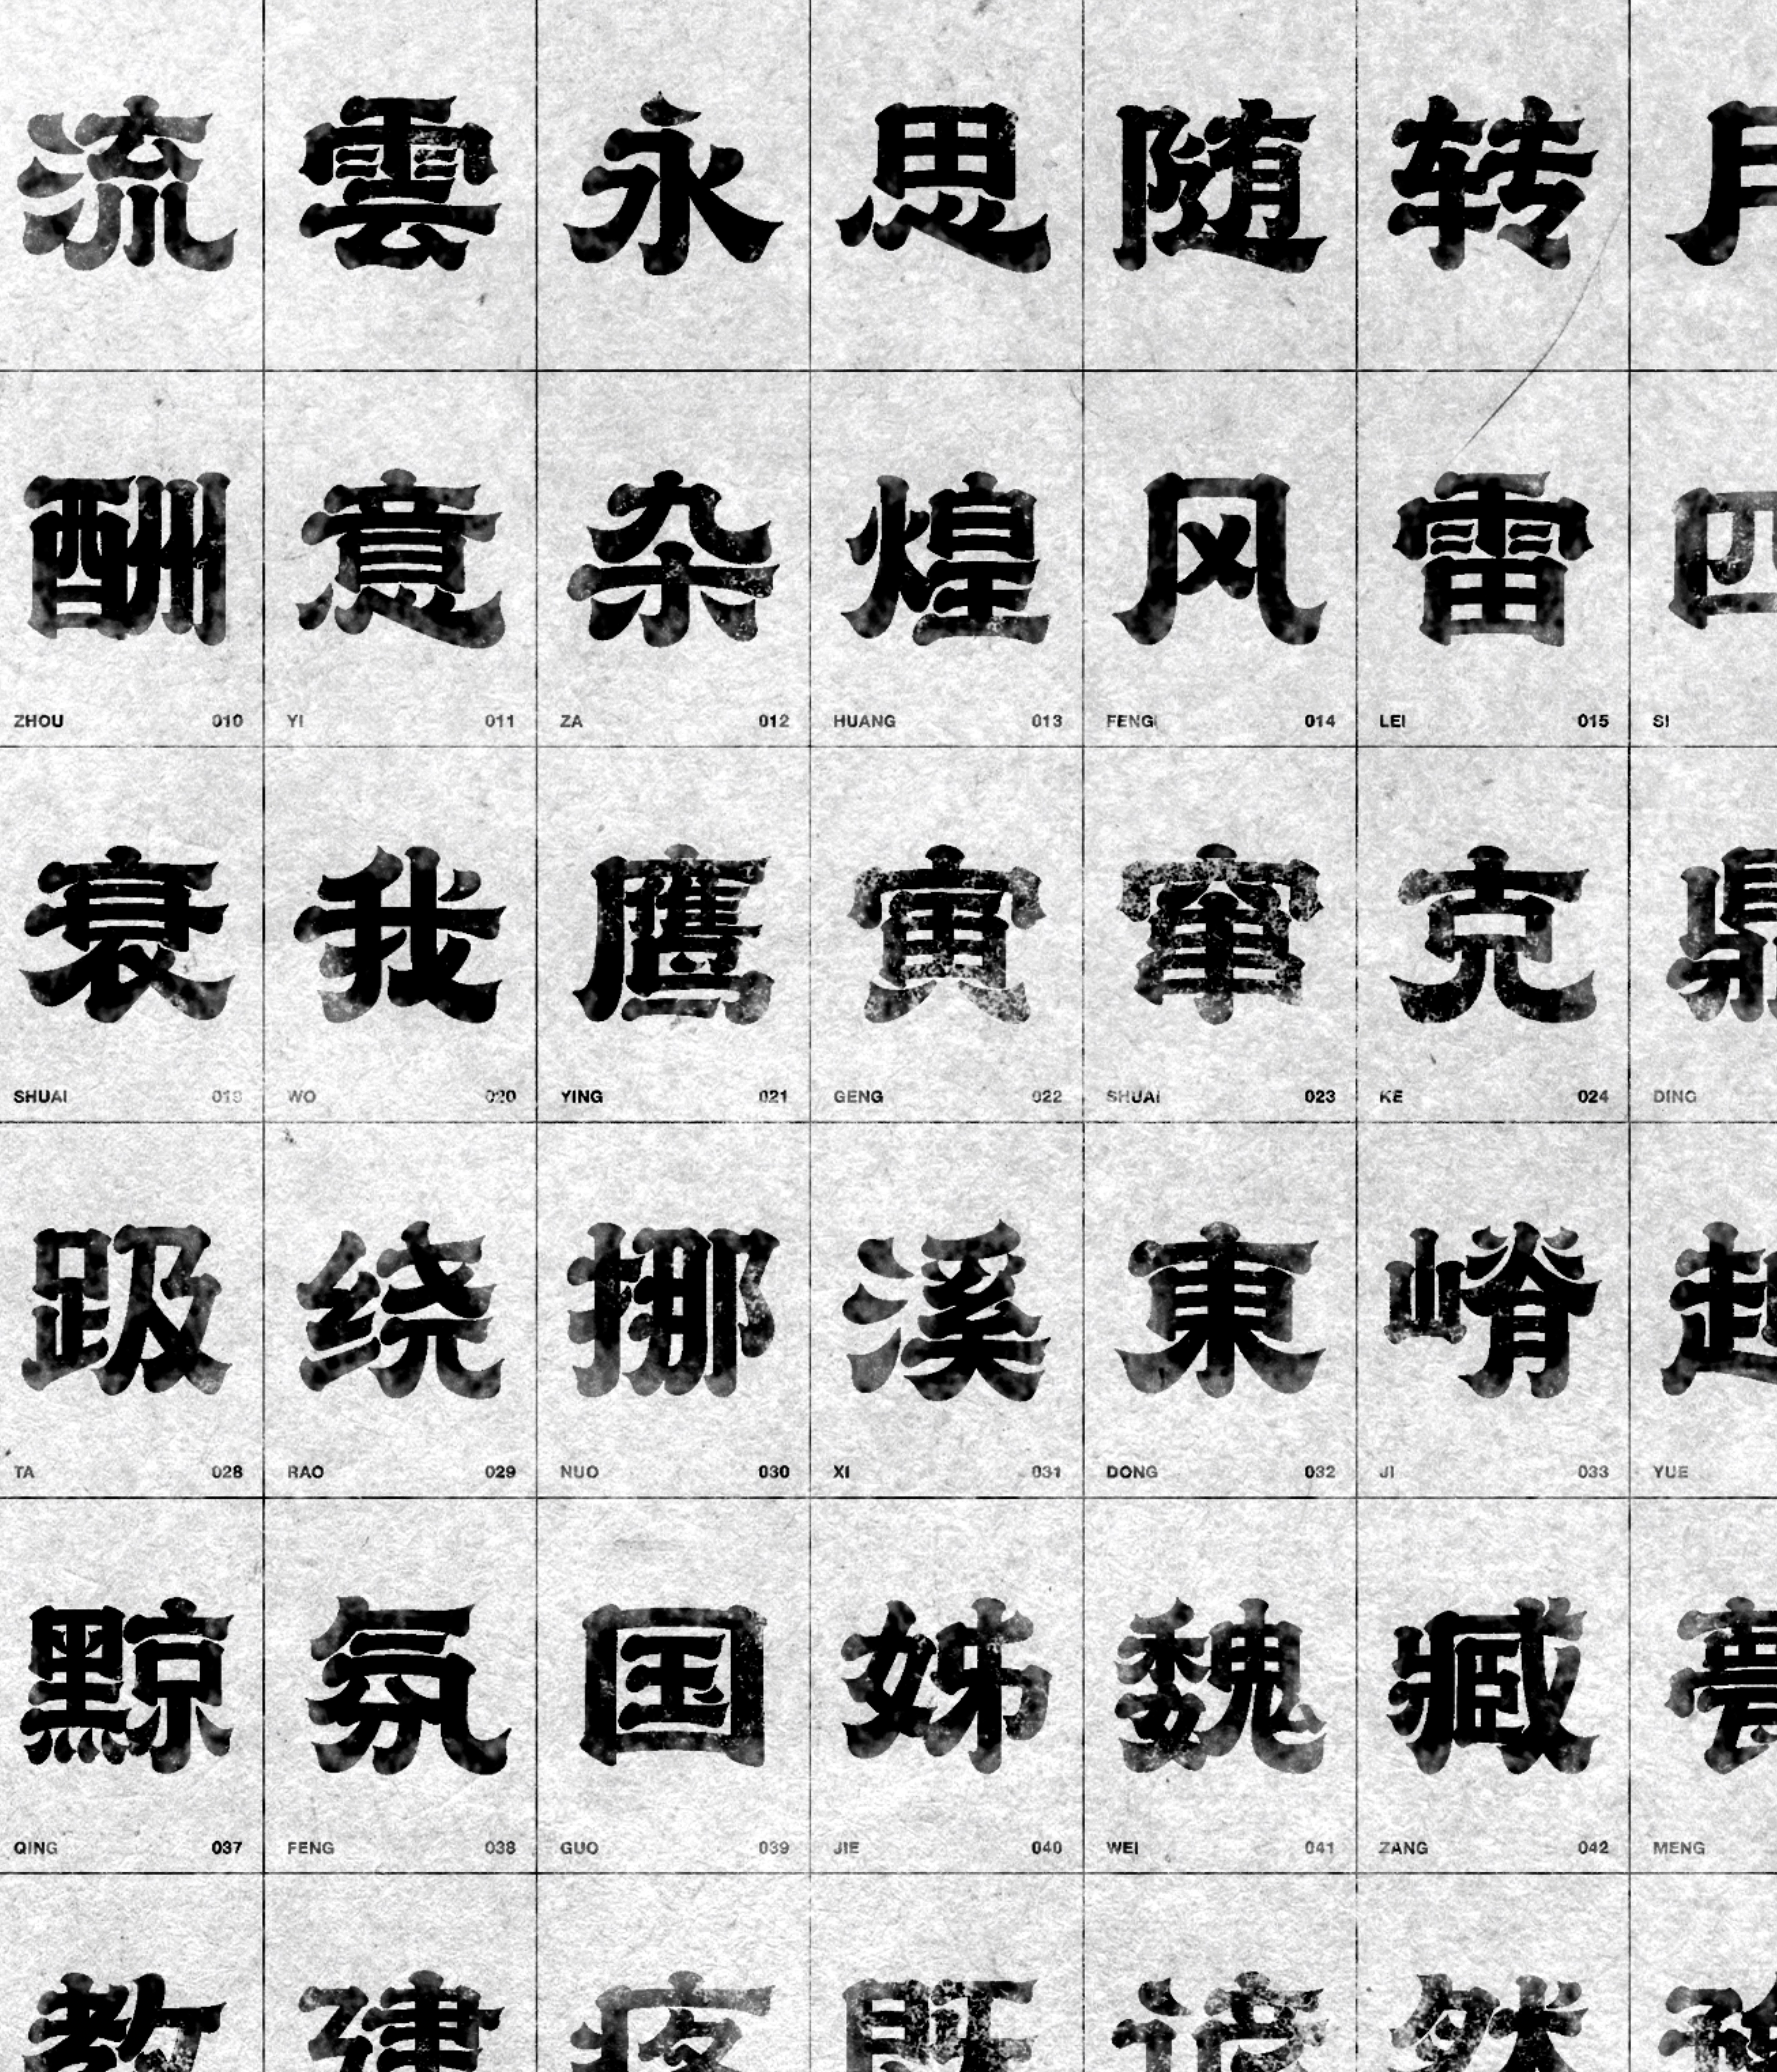 7P Inspiration Chinese font logo design scheme #.739